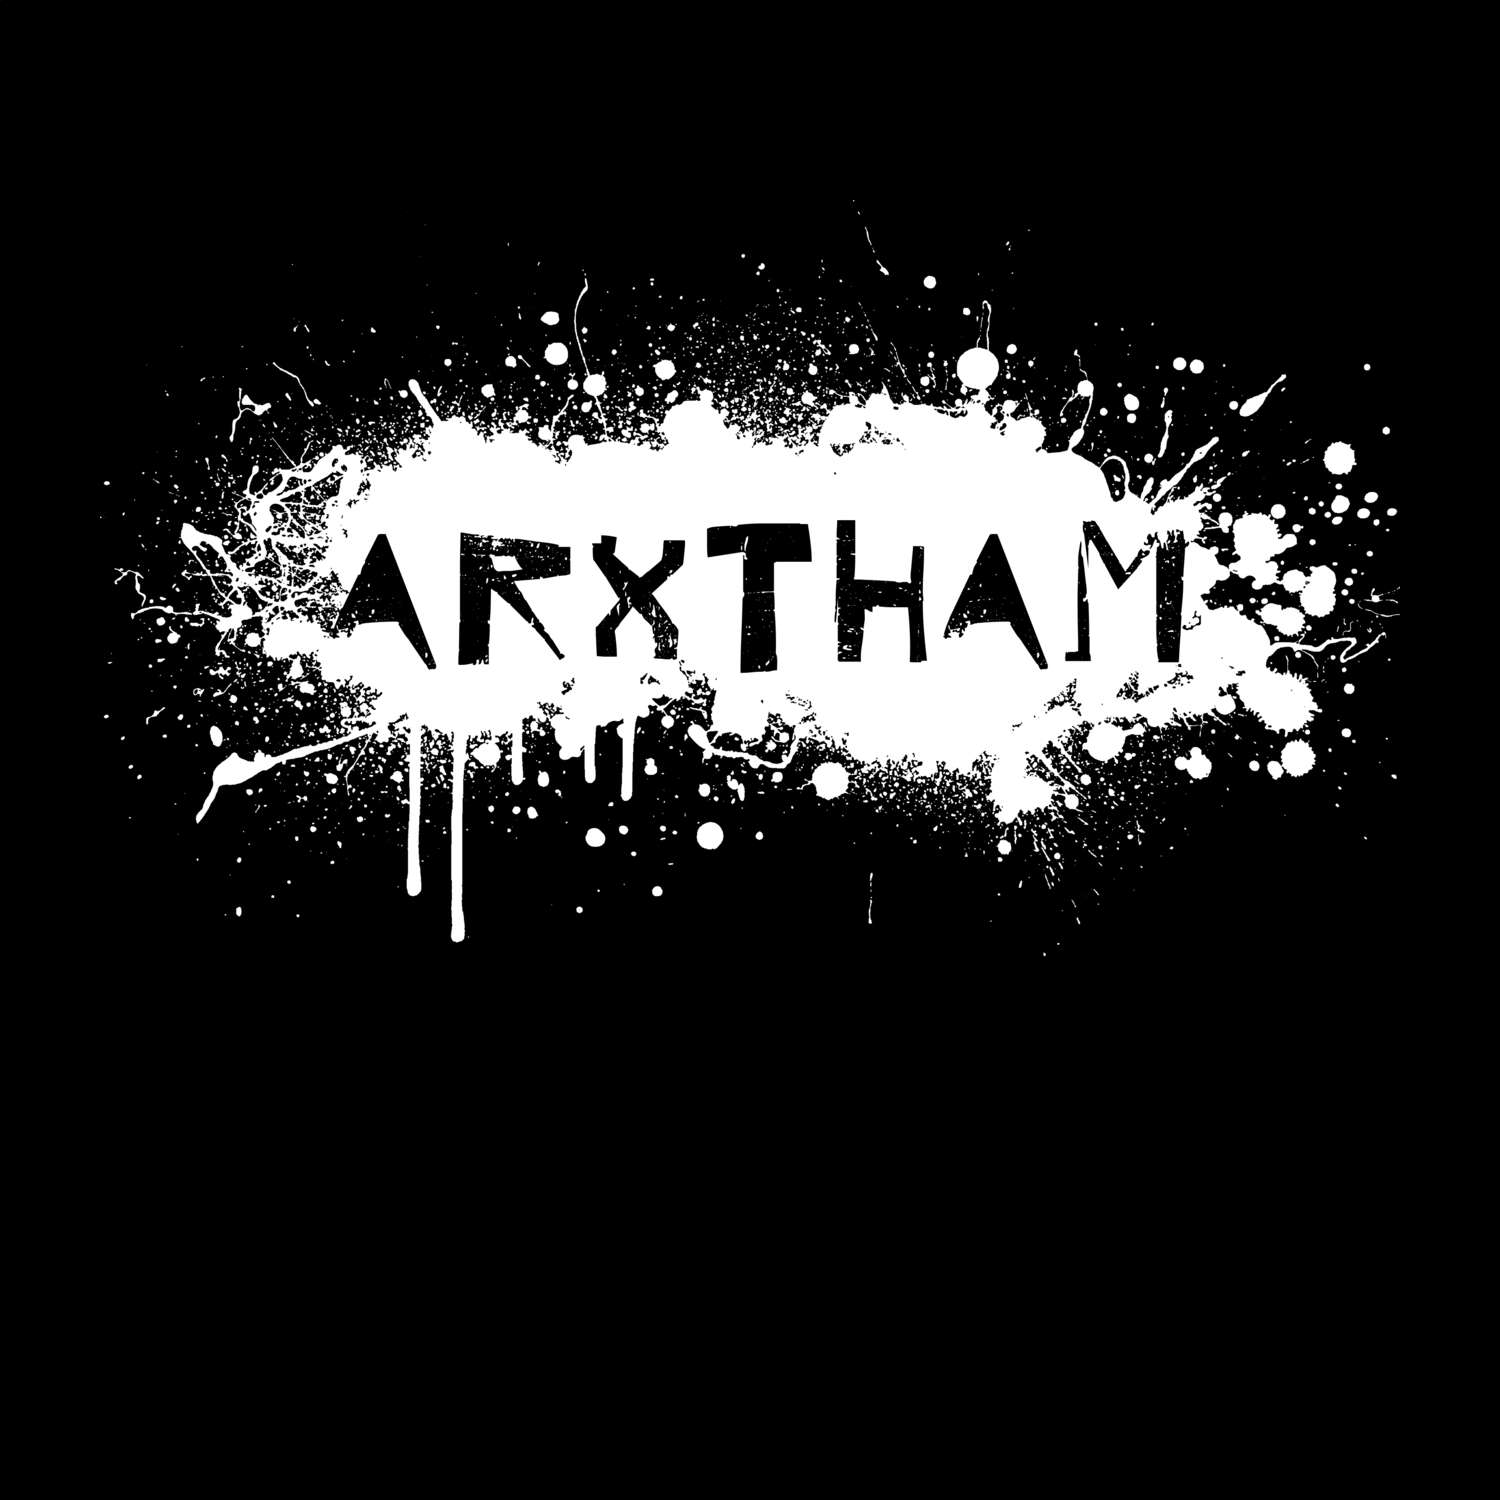 Arxtham T-Shirt »Paint Splash Punk«